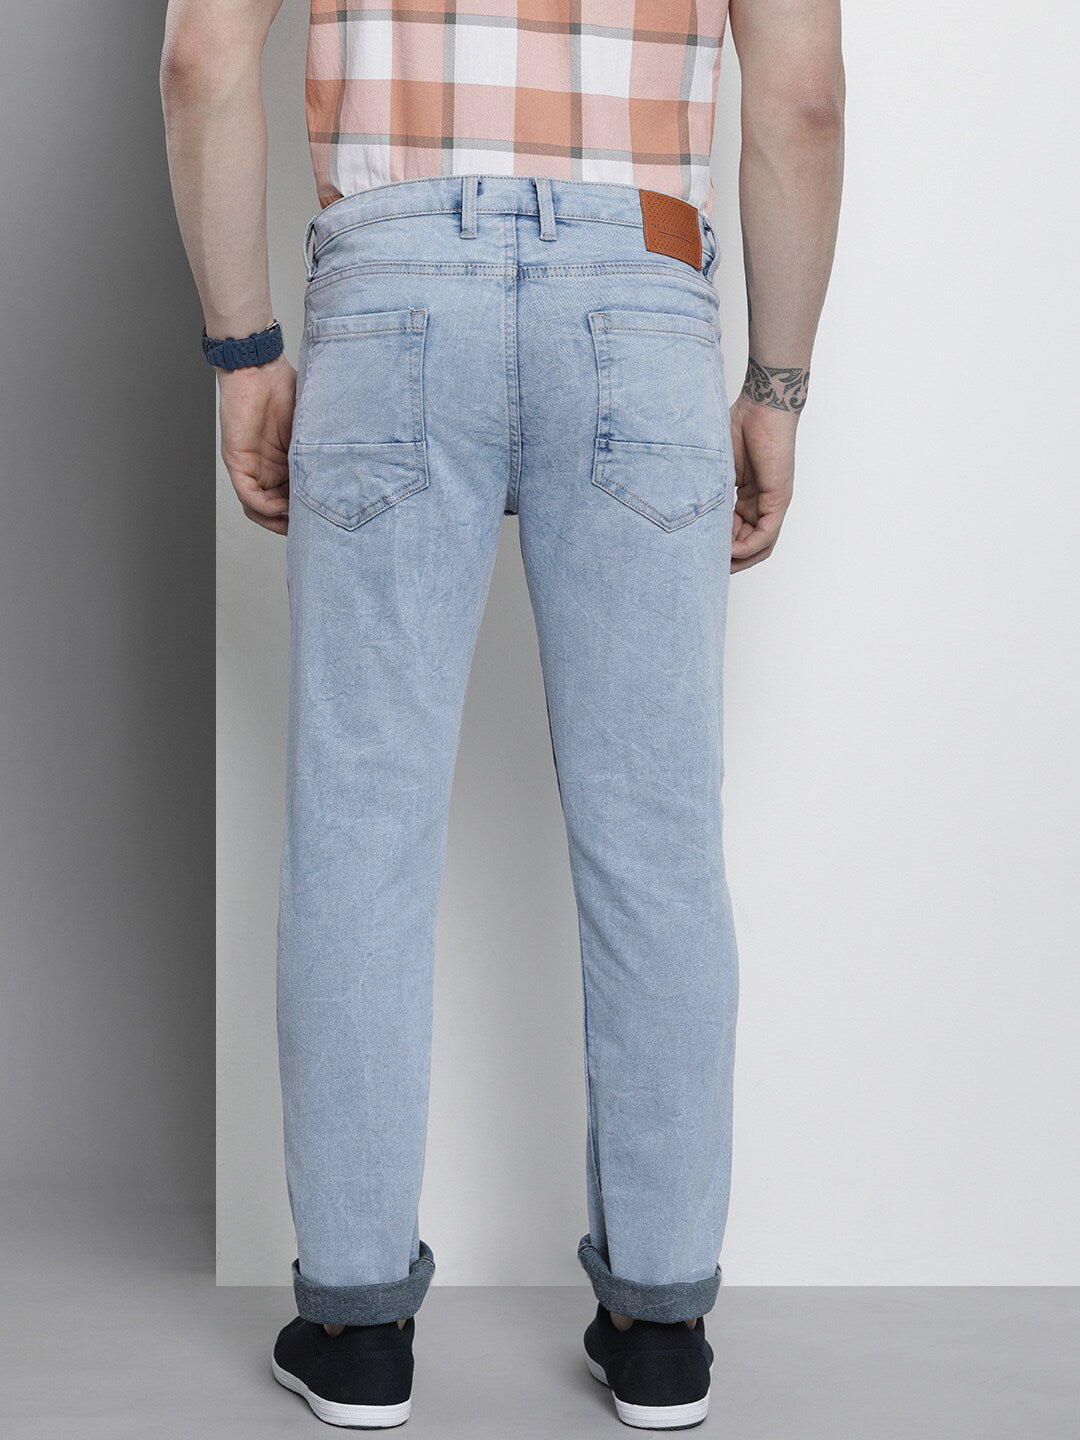 Shop Men Distressed Straight Jeans Online.